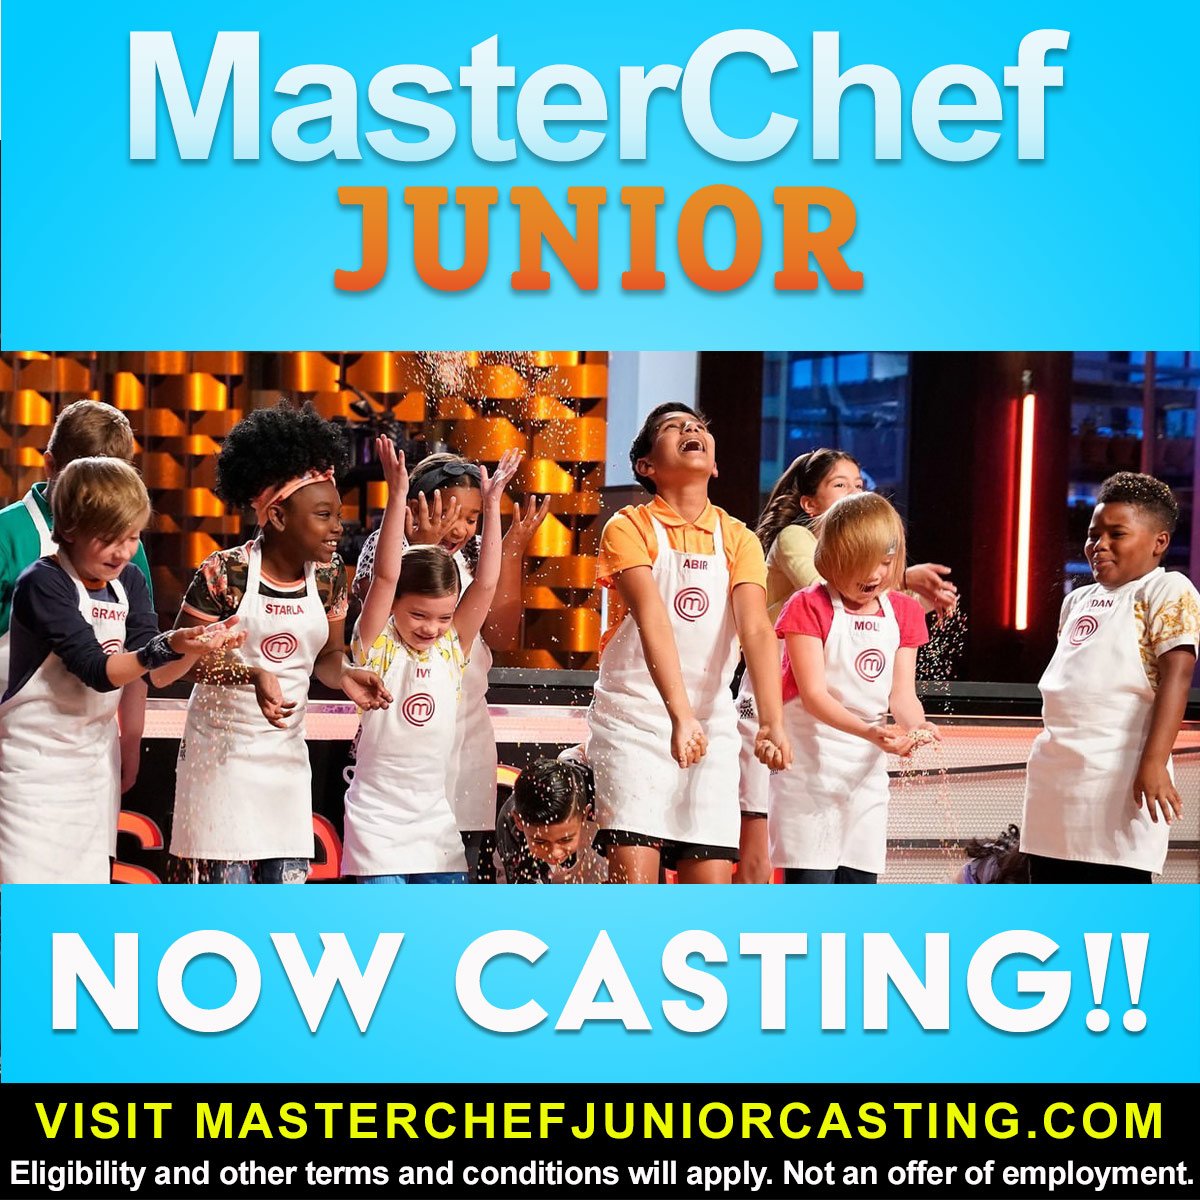 Casting call opens for Gordon Ramsay's MasterChef Junior on FOX WXXV